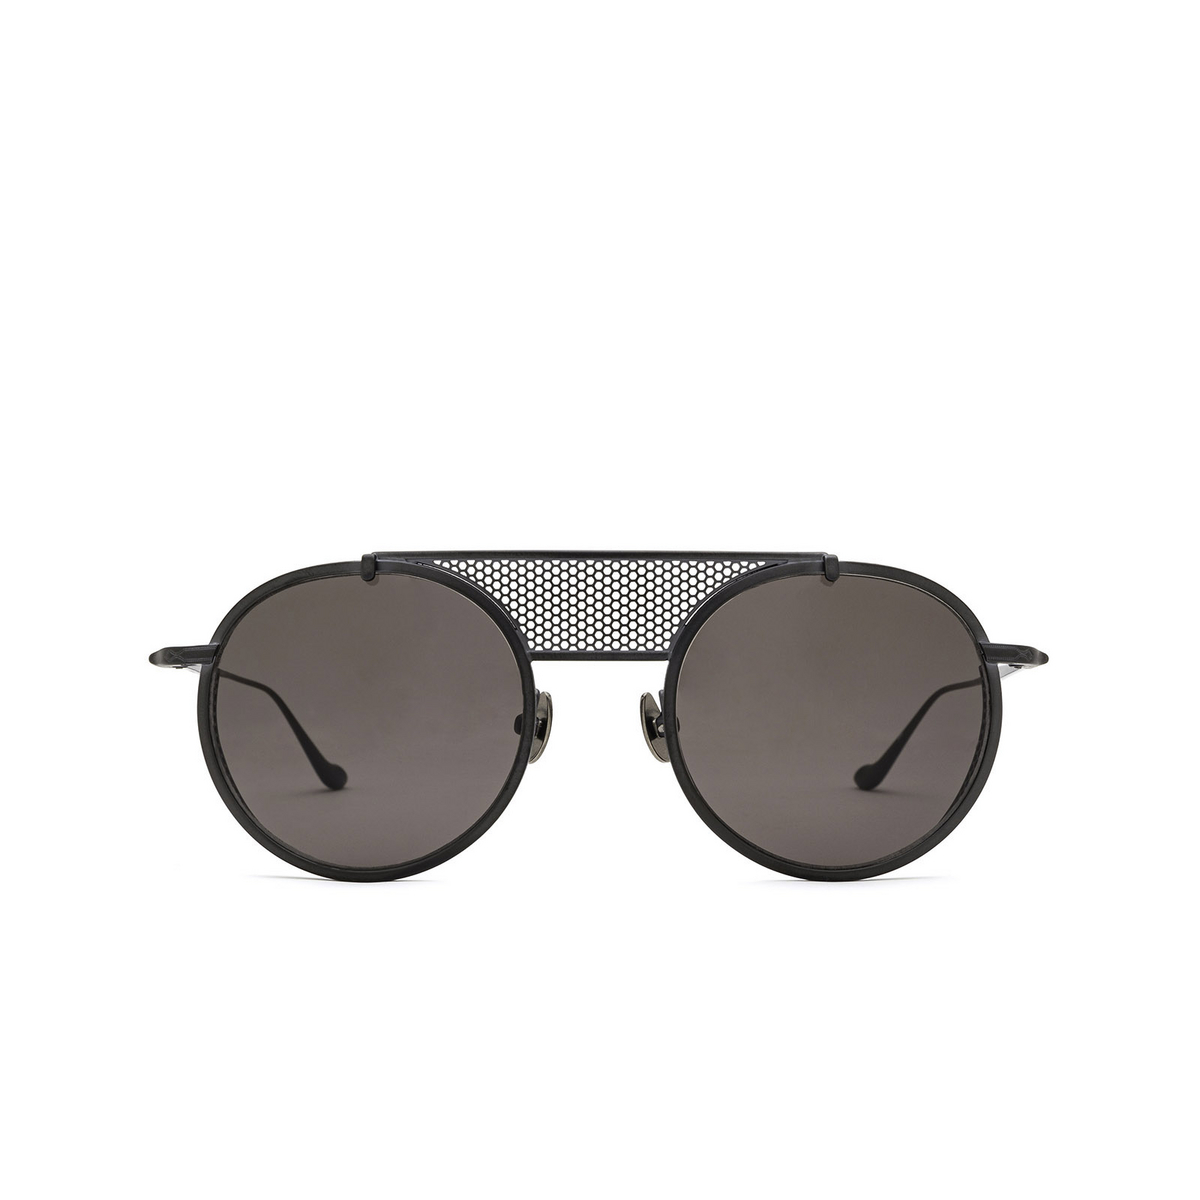 Matsuda® Round Sunglasses: M3097 color Matte Black Mbk - front view.